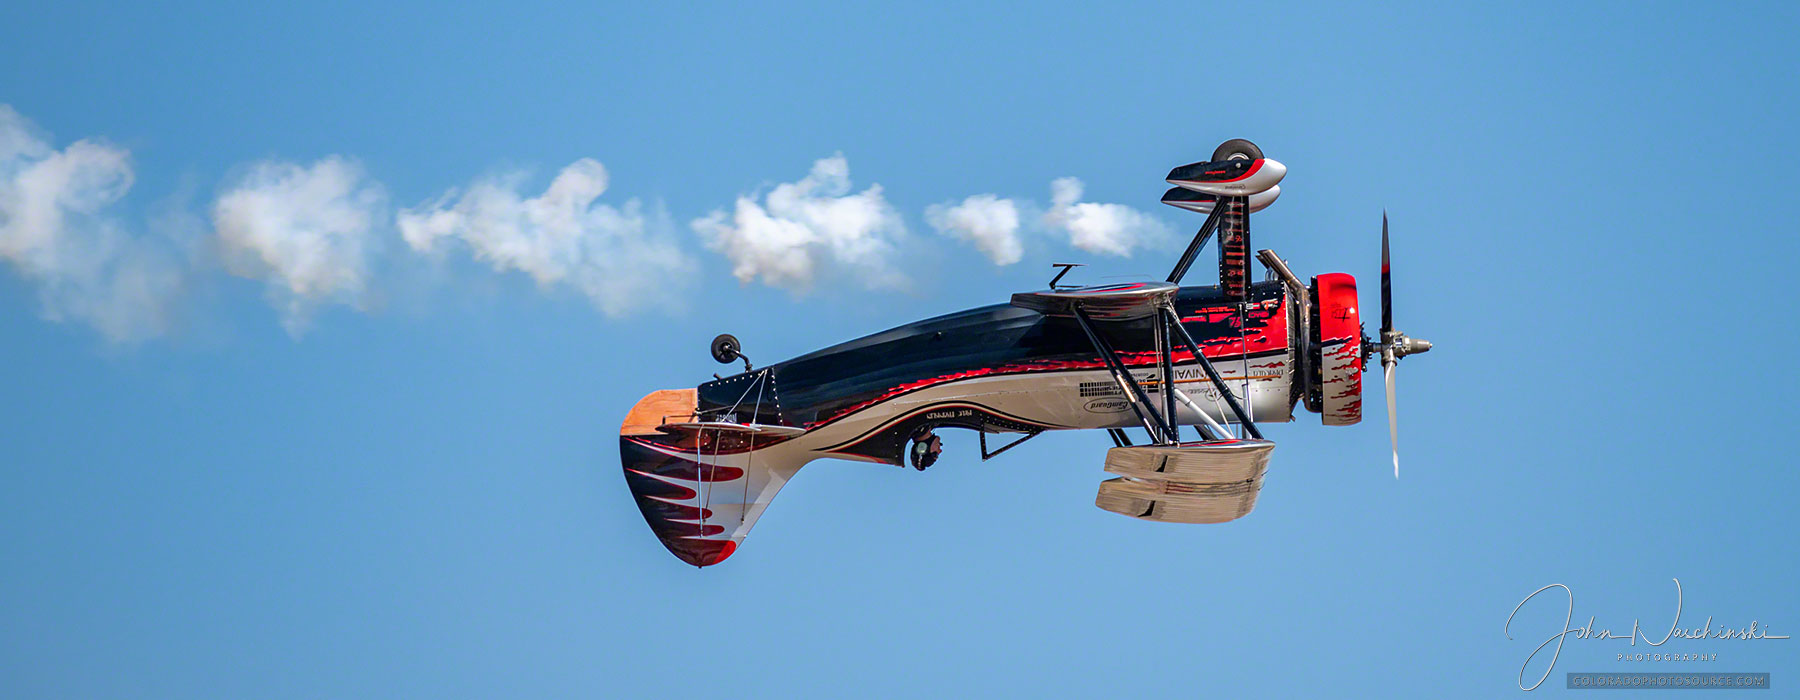 Photo of Kyle Franklin Dracula Custom Biplane Flying Inverted at Colorado Springs Airshow